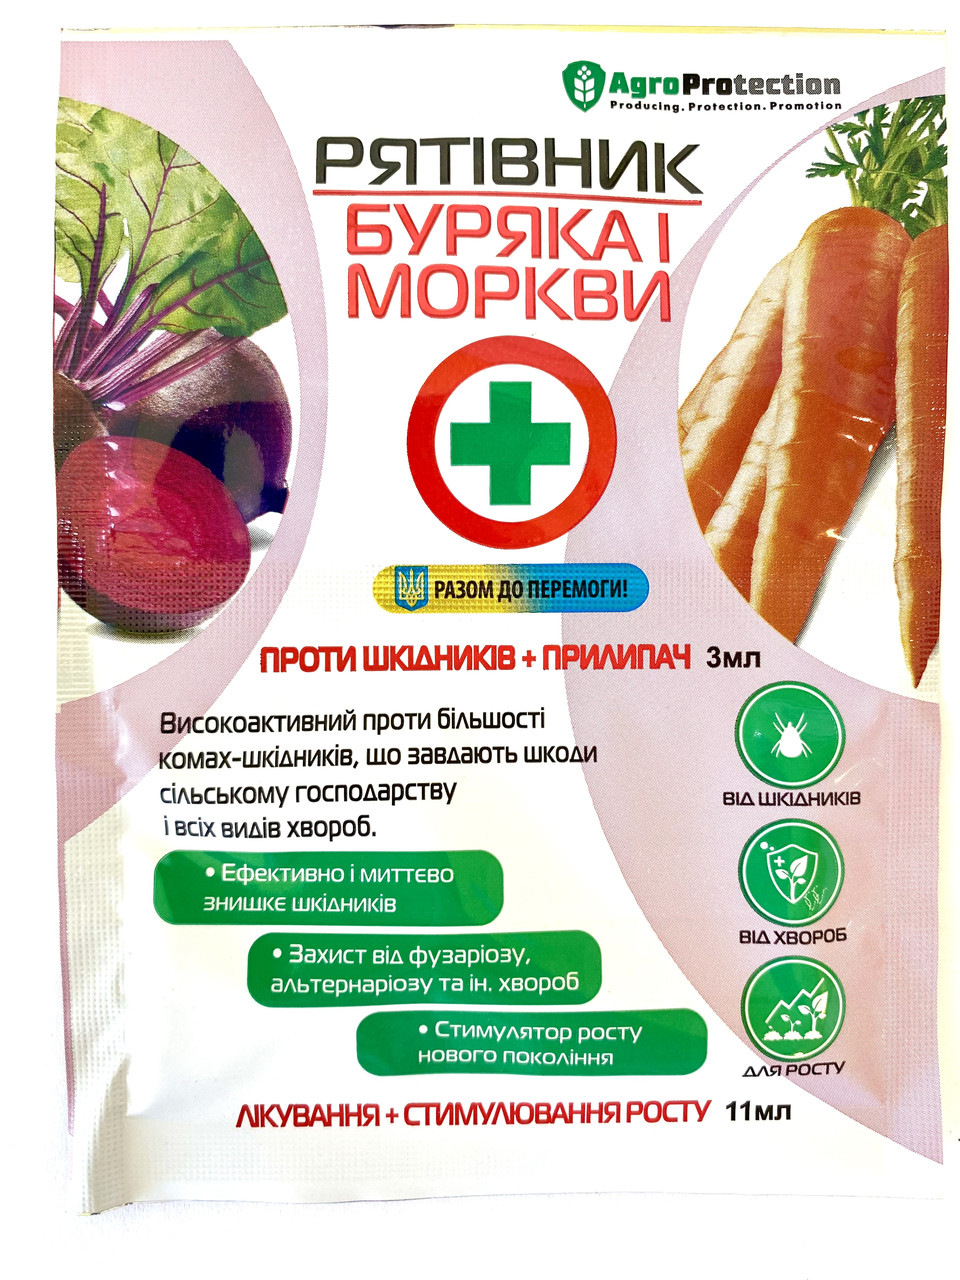 Інсектицид + фунгіцид «Рятівник моркви та буряки» Agroprotection